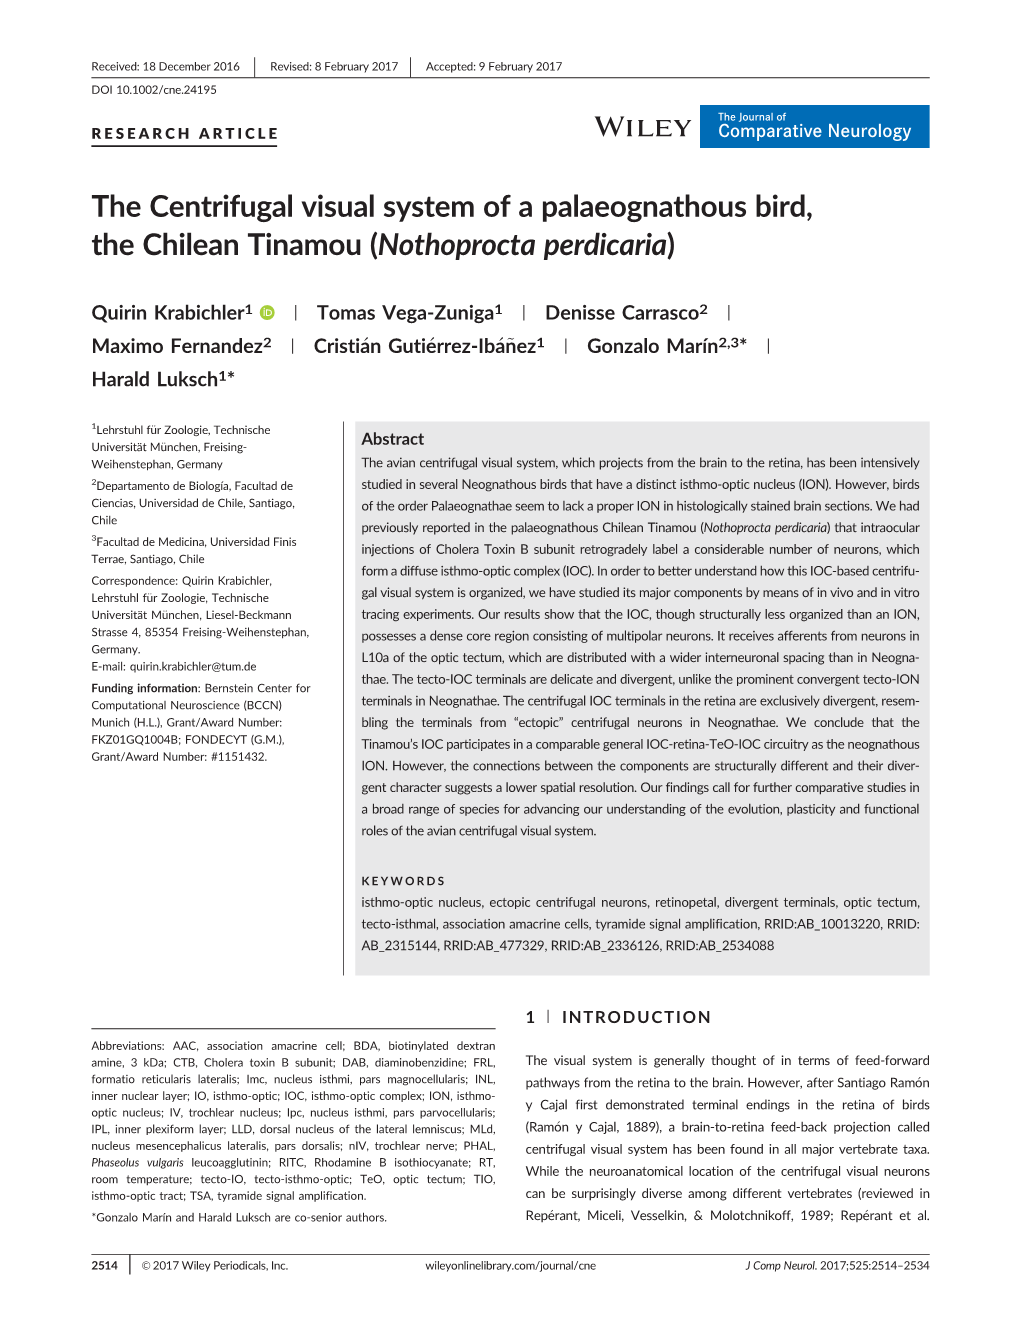 The Centrifugal Visual System of a Palaeognathous Bird, the Chilean Tinamou (Nothoprocta Perdicaria)